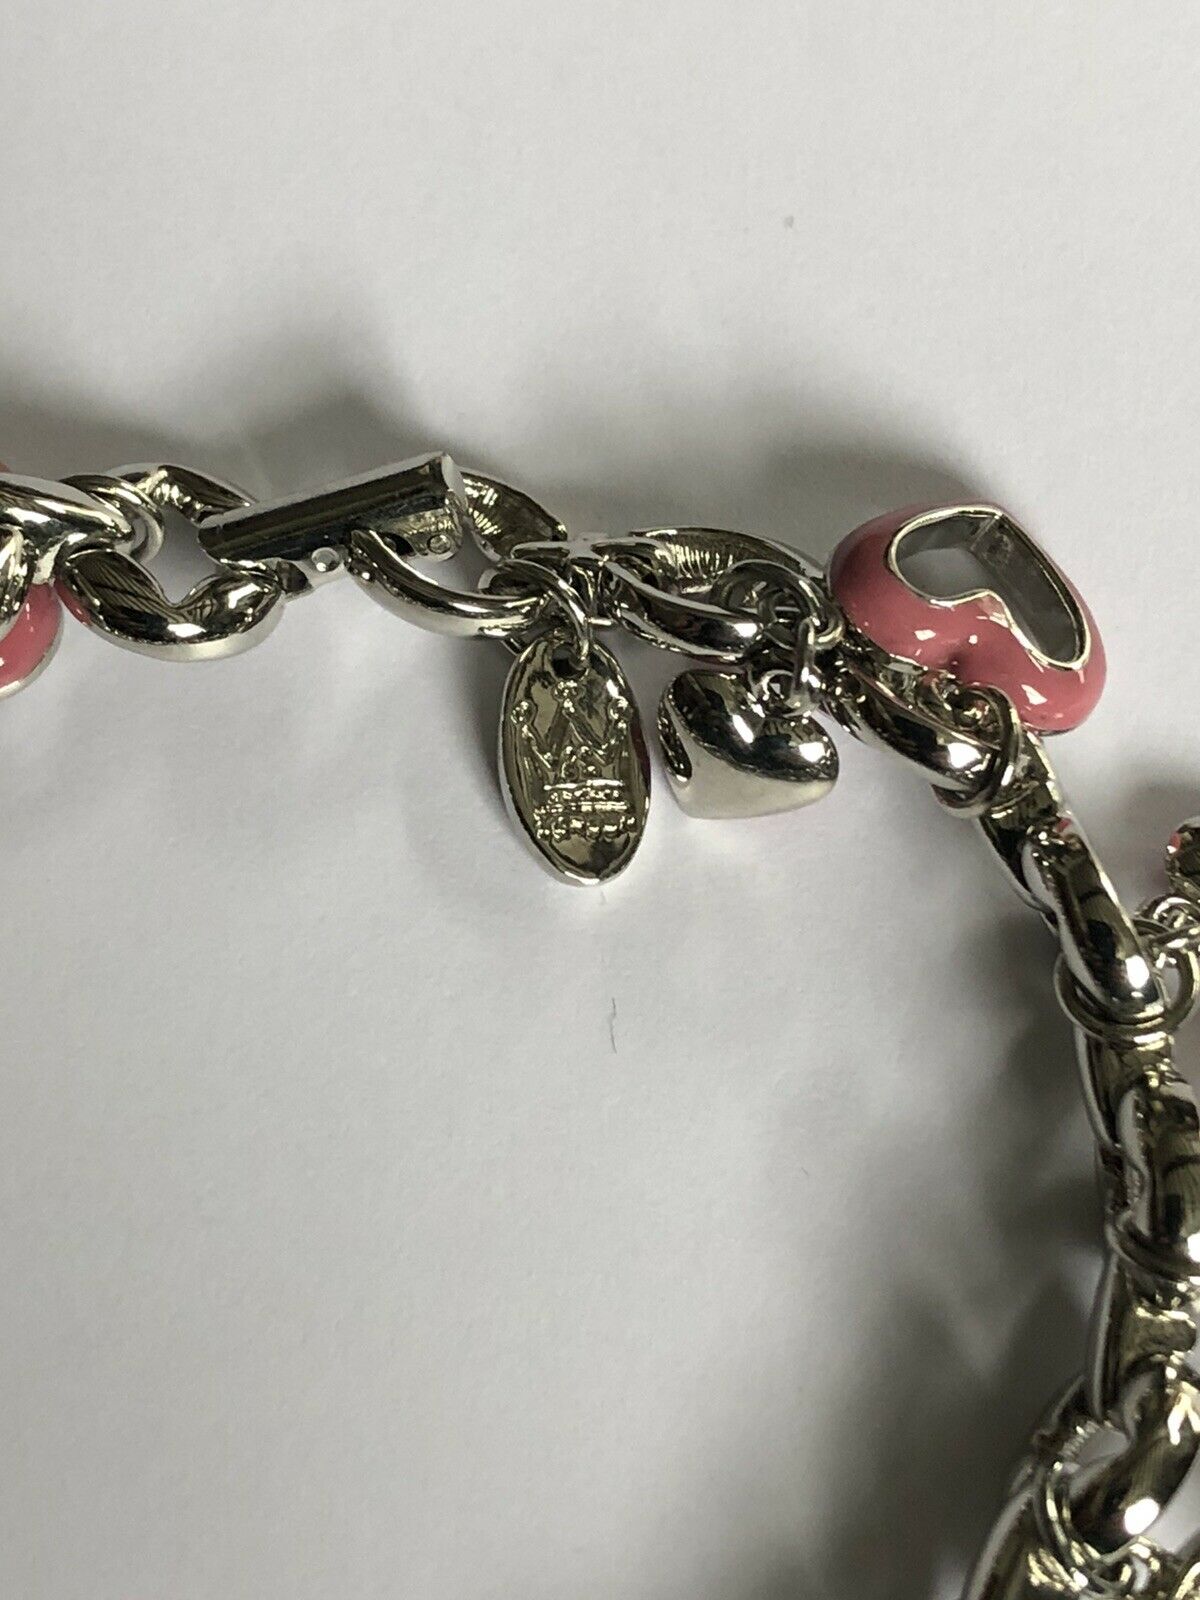 Vintage 1980s Rhodium Plated Pink Enamel Swarovski Crystal Charm Bracelet